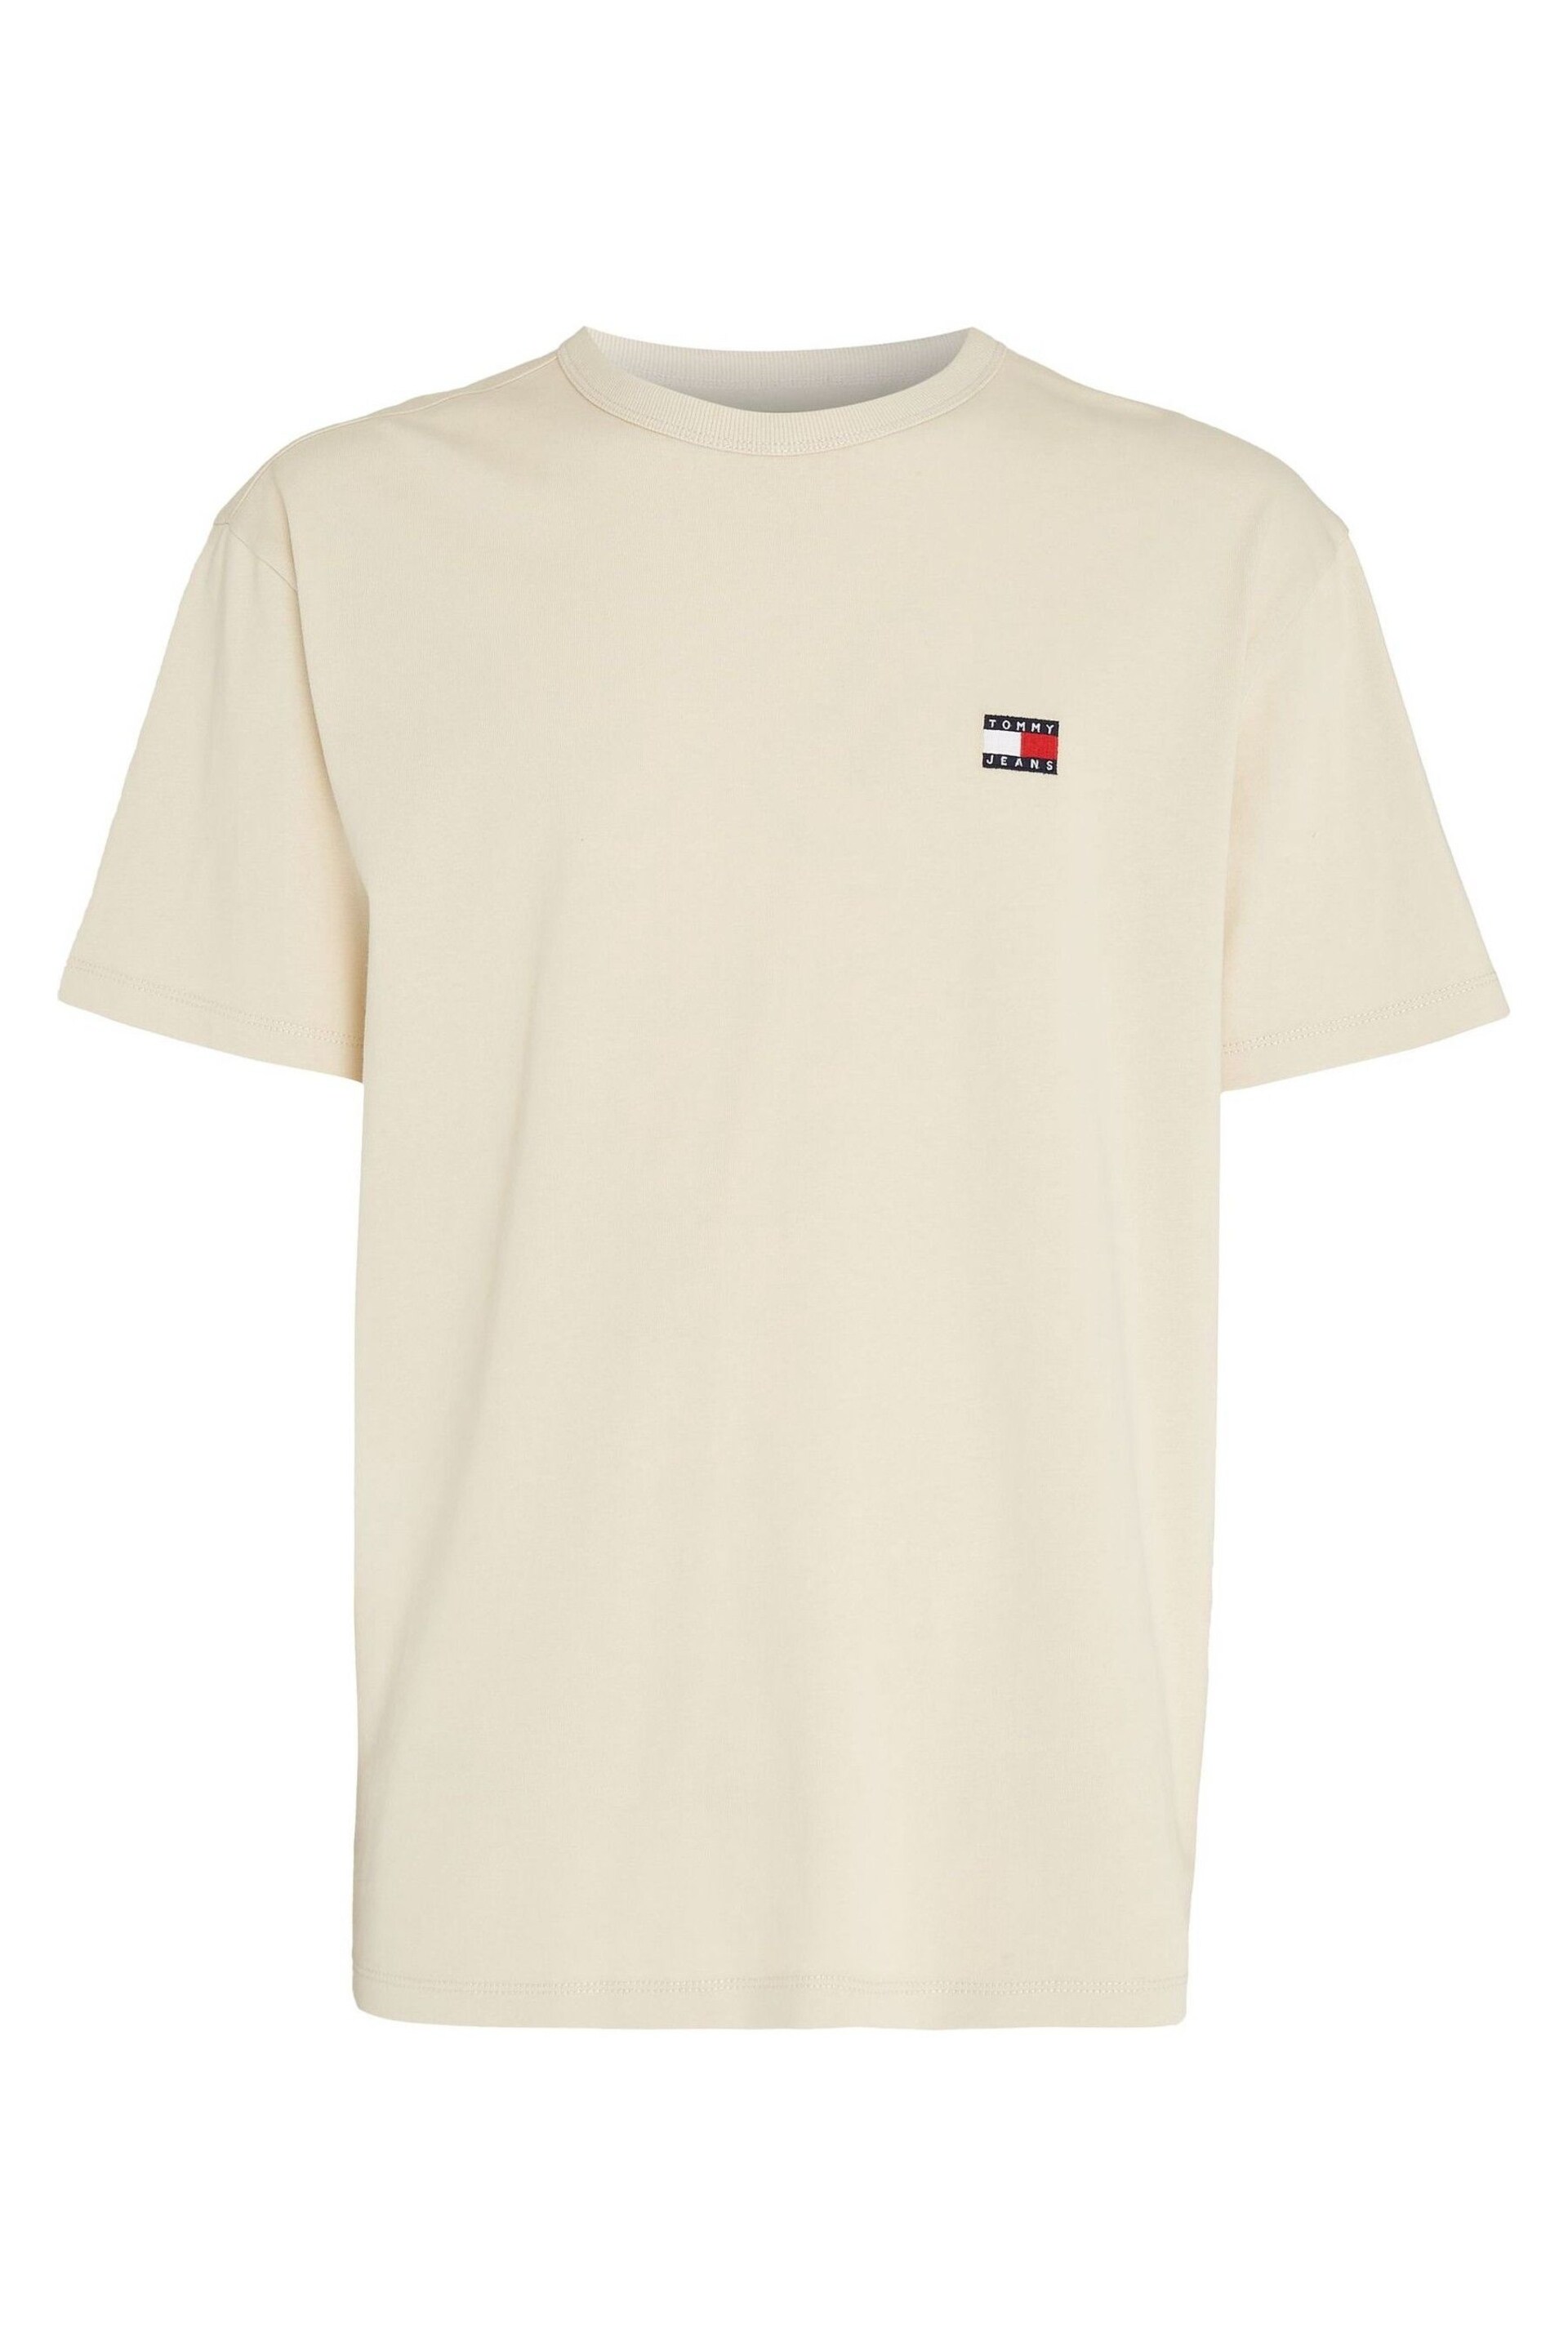 Tommy Jeans Regular Fit Badge T-Shirt - Image 4 of 6